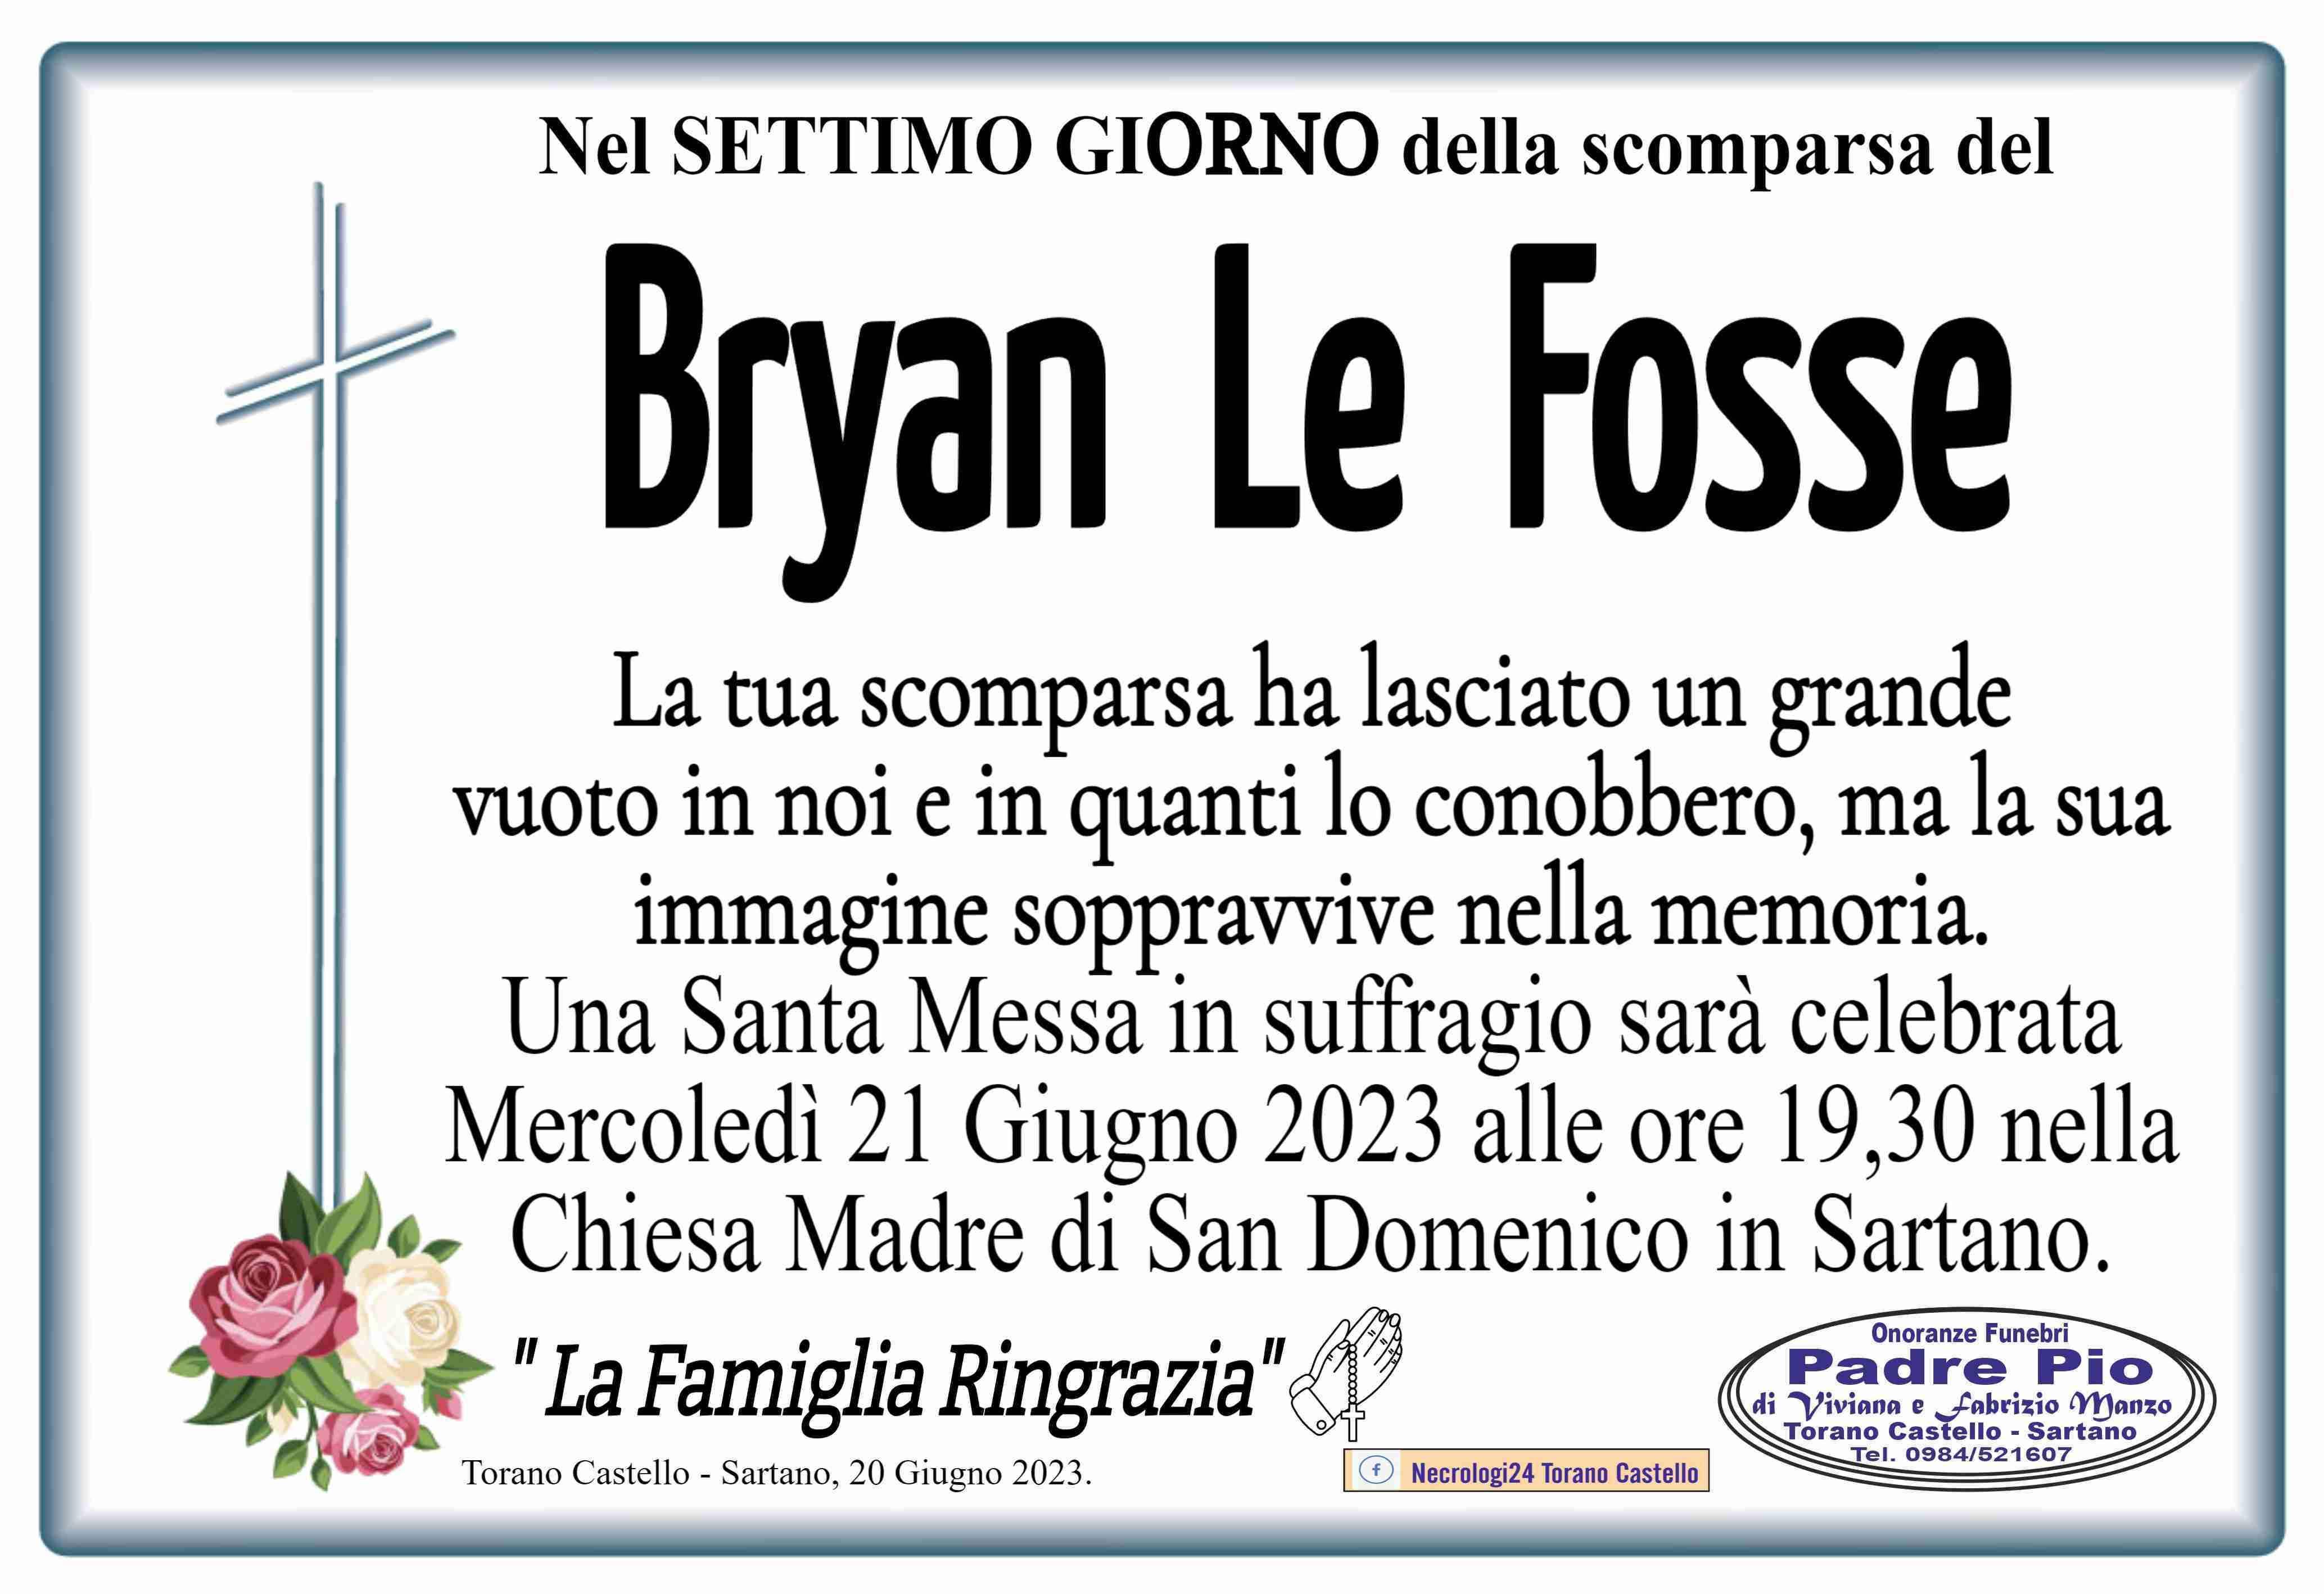 Bryan Le Fosse